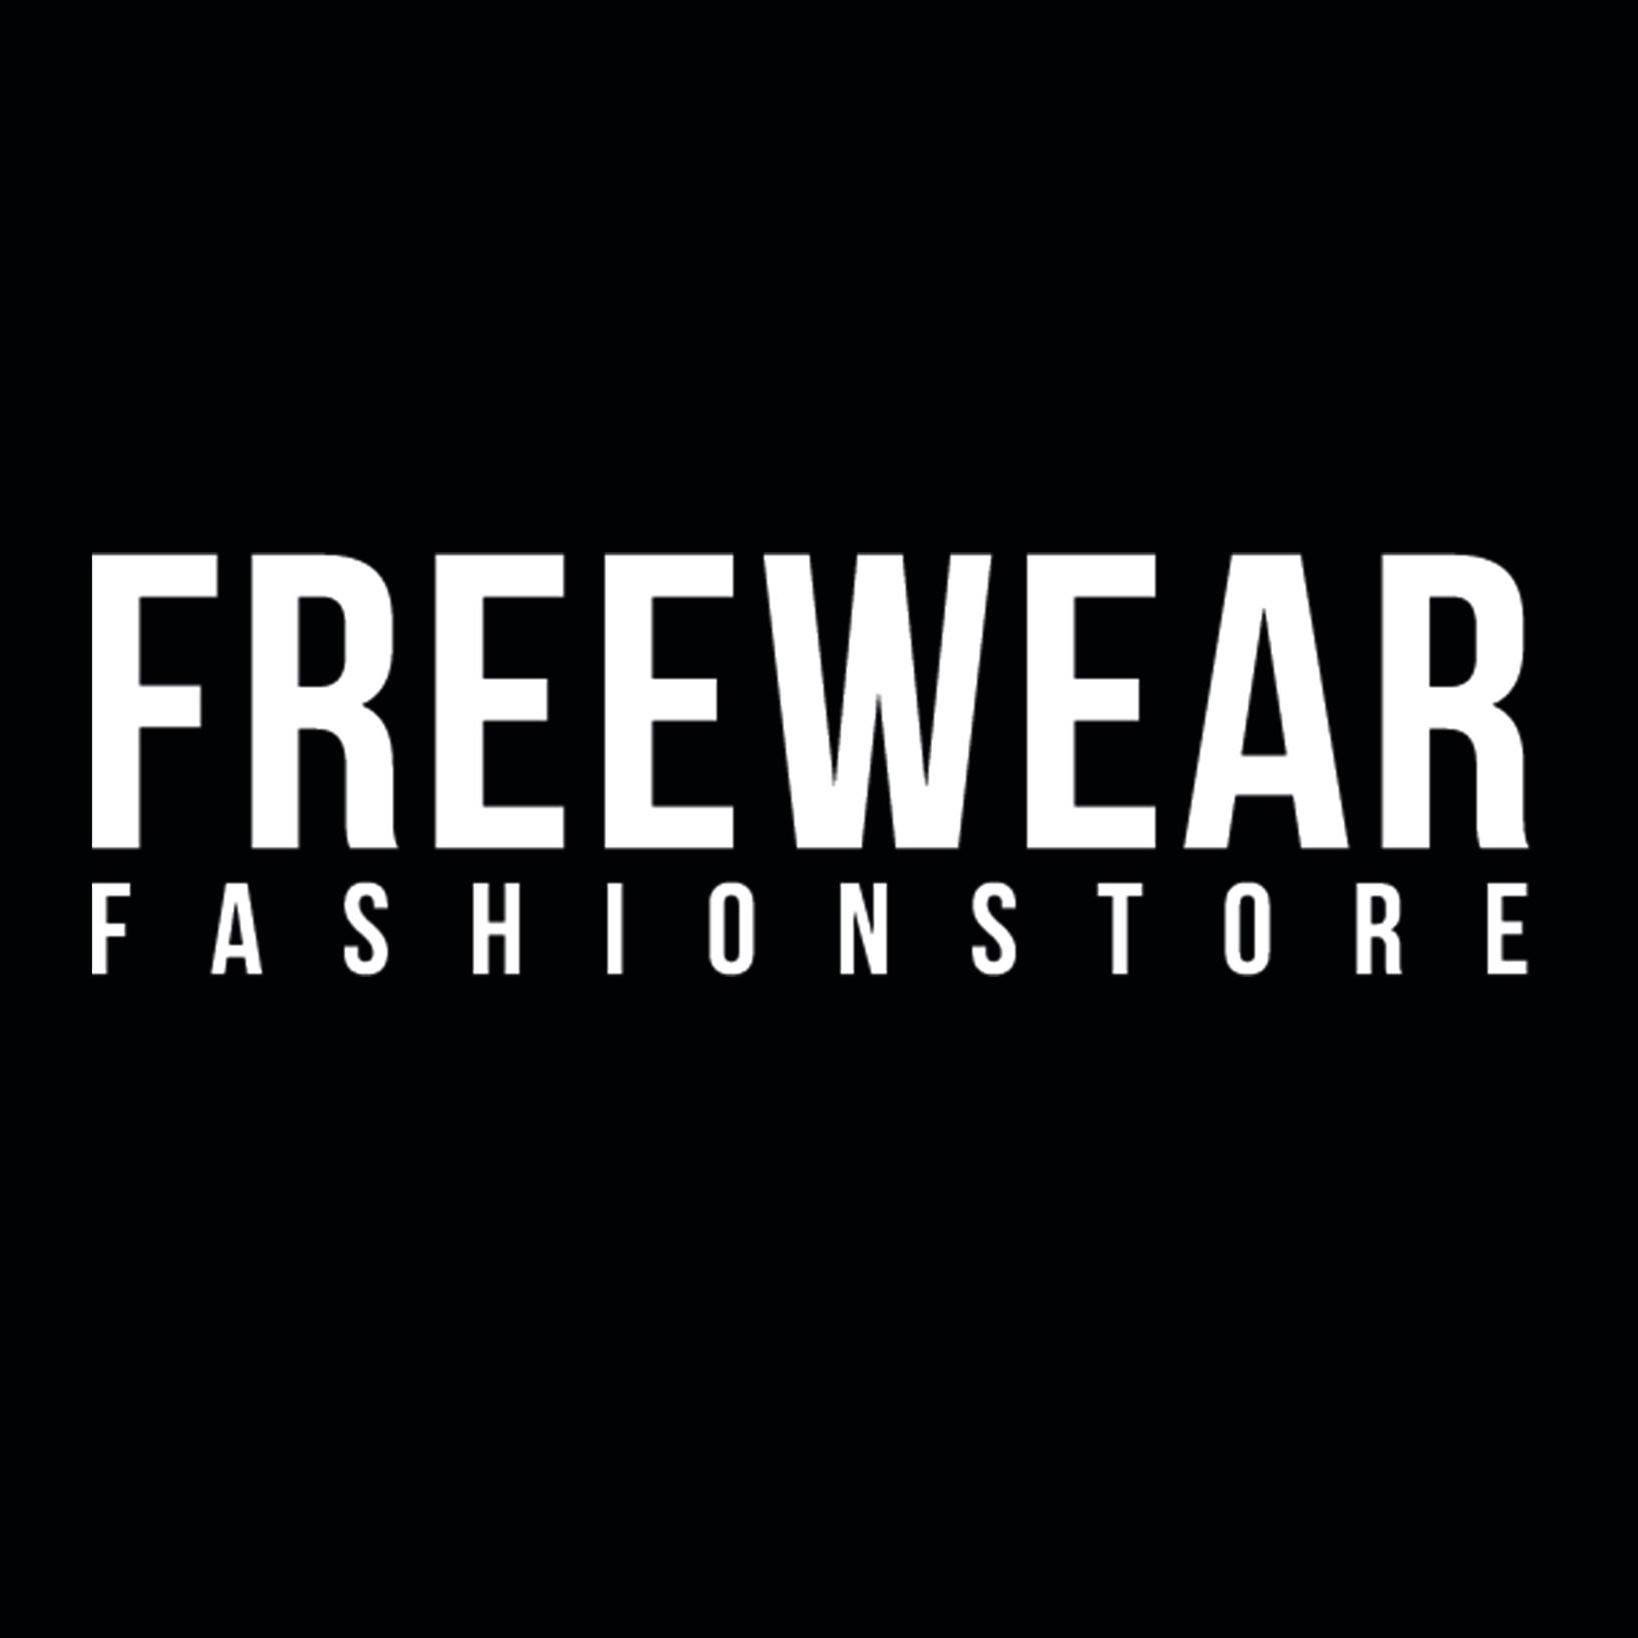 Freewear.nl reviews, beoordelingen en ervaringen